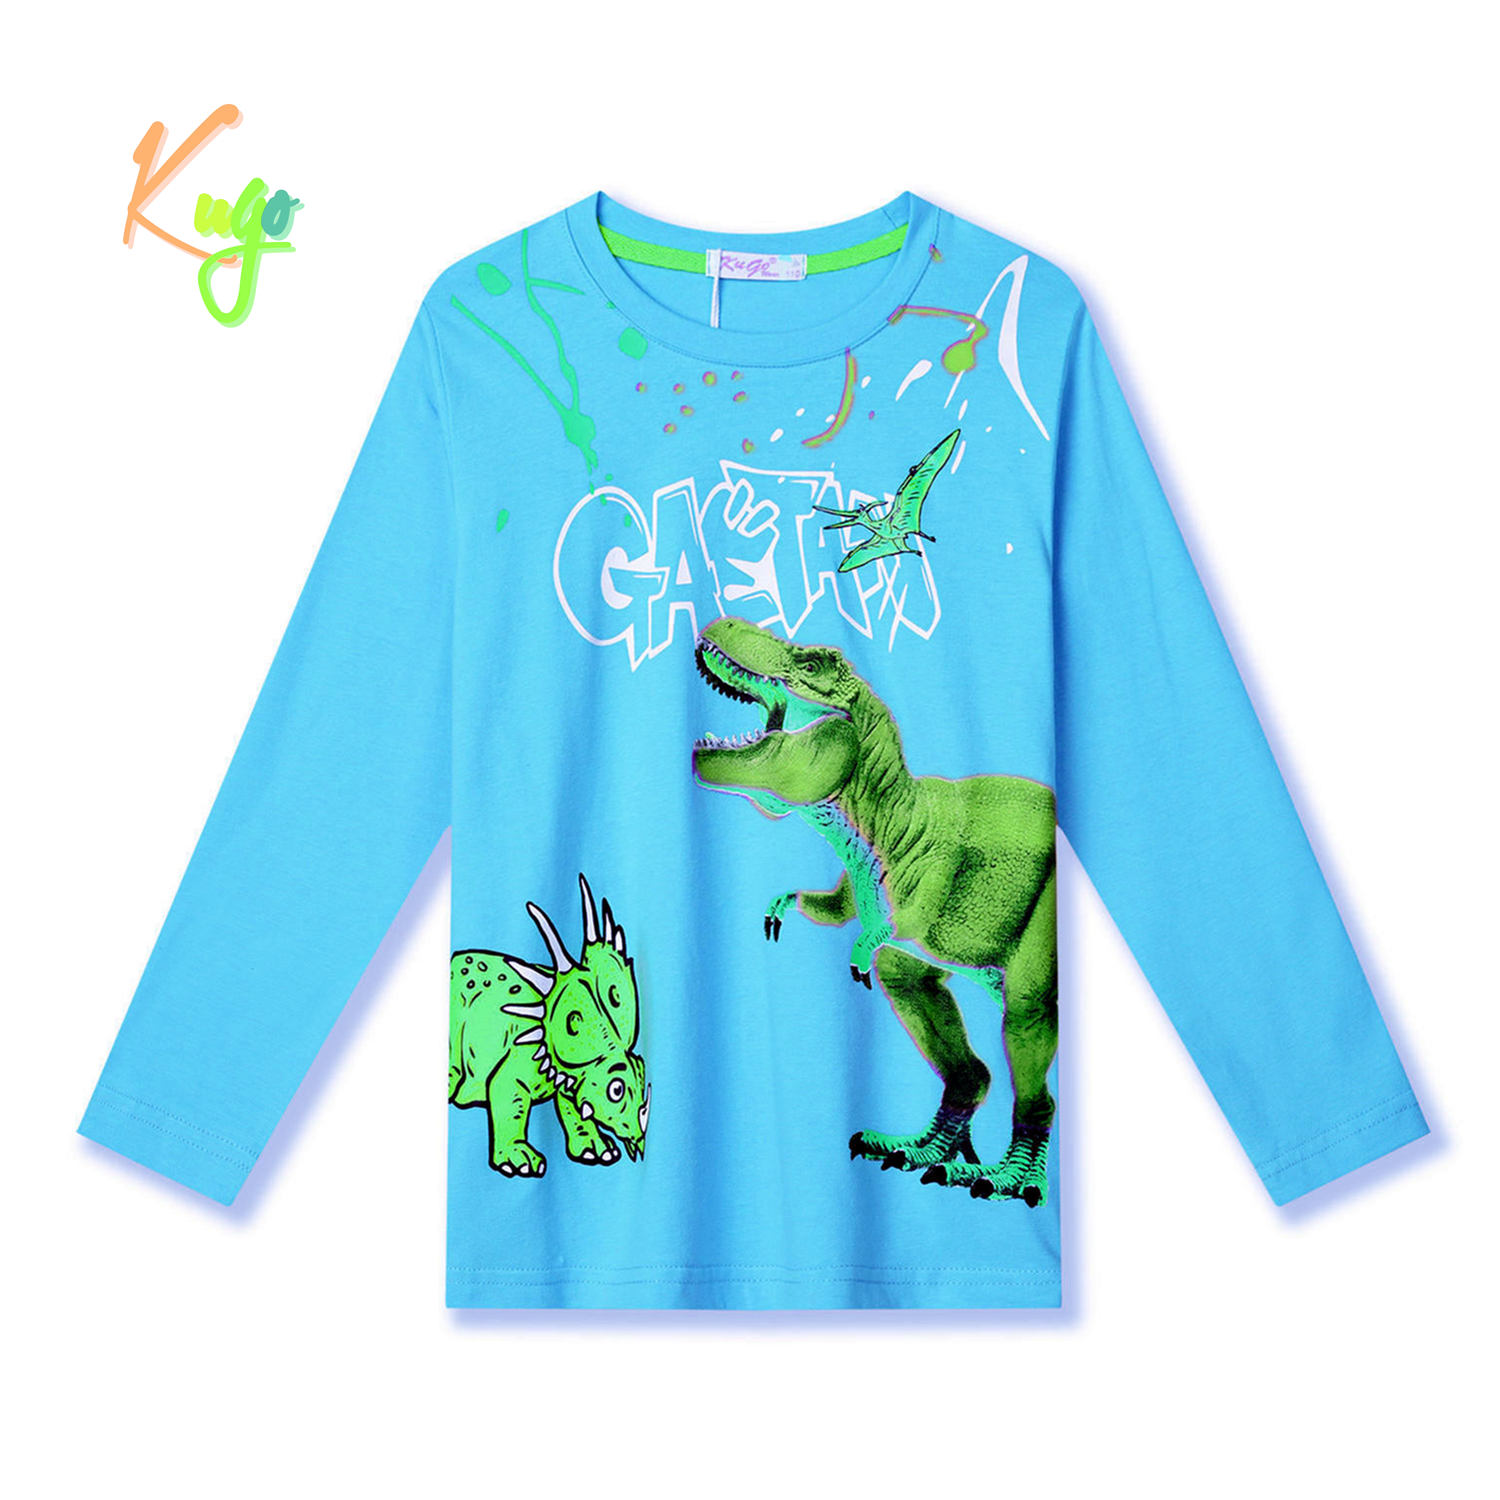 Chlapecké tričko - KUGO HC9307, modrá Barva: Modrá, Velikost: 116